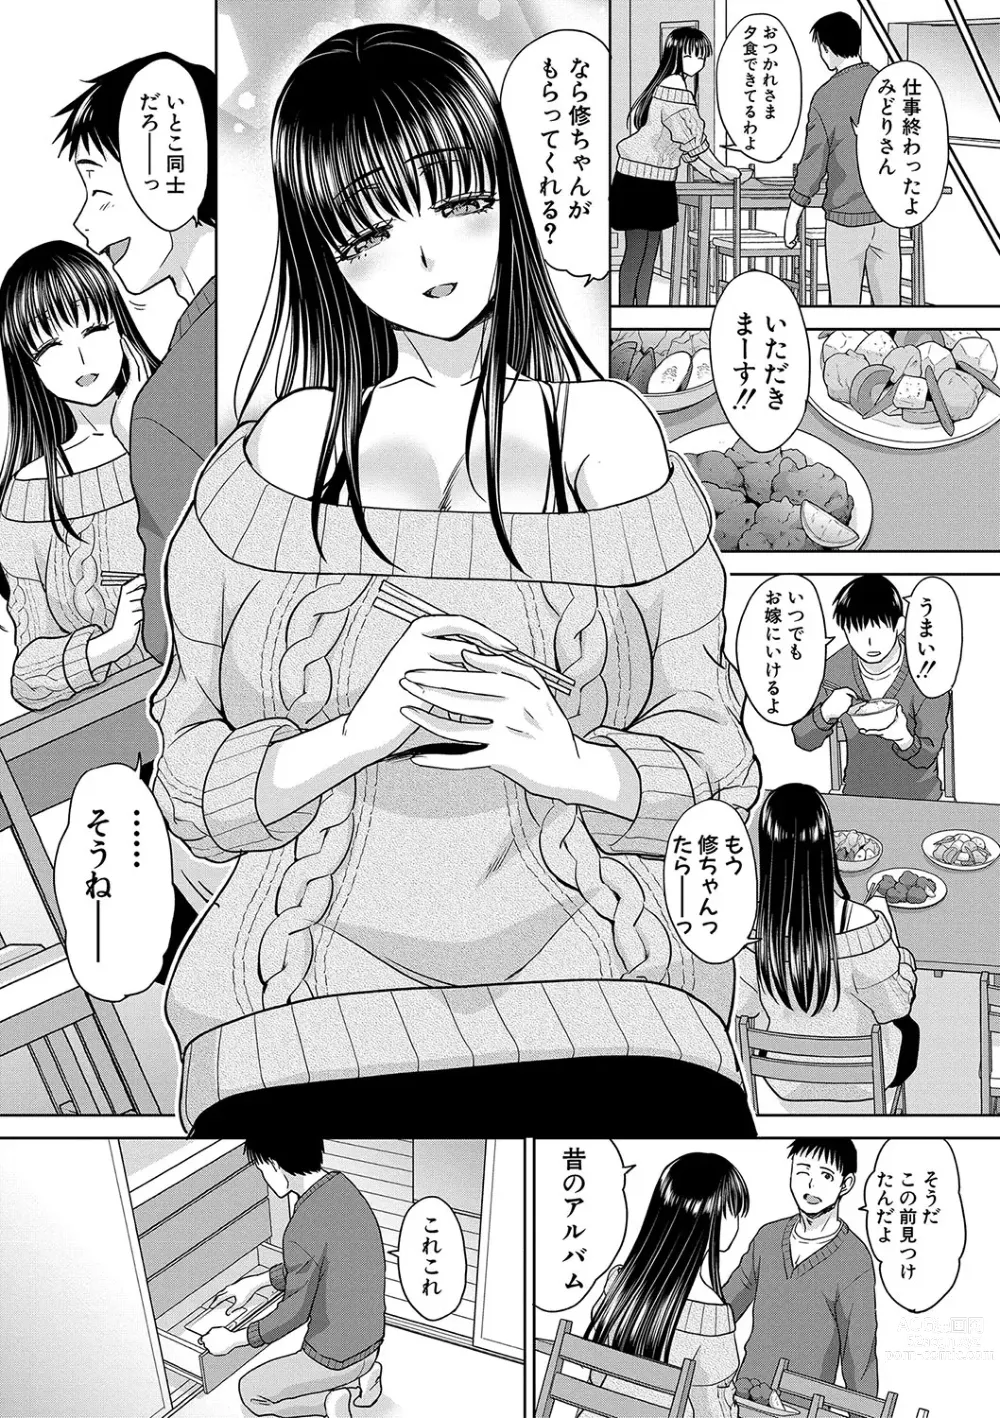 Page 6 of manga Shinseki Midara My Home Harem